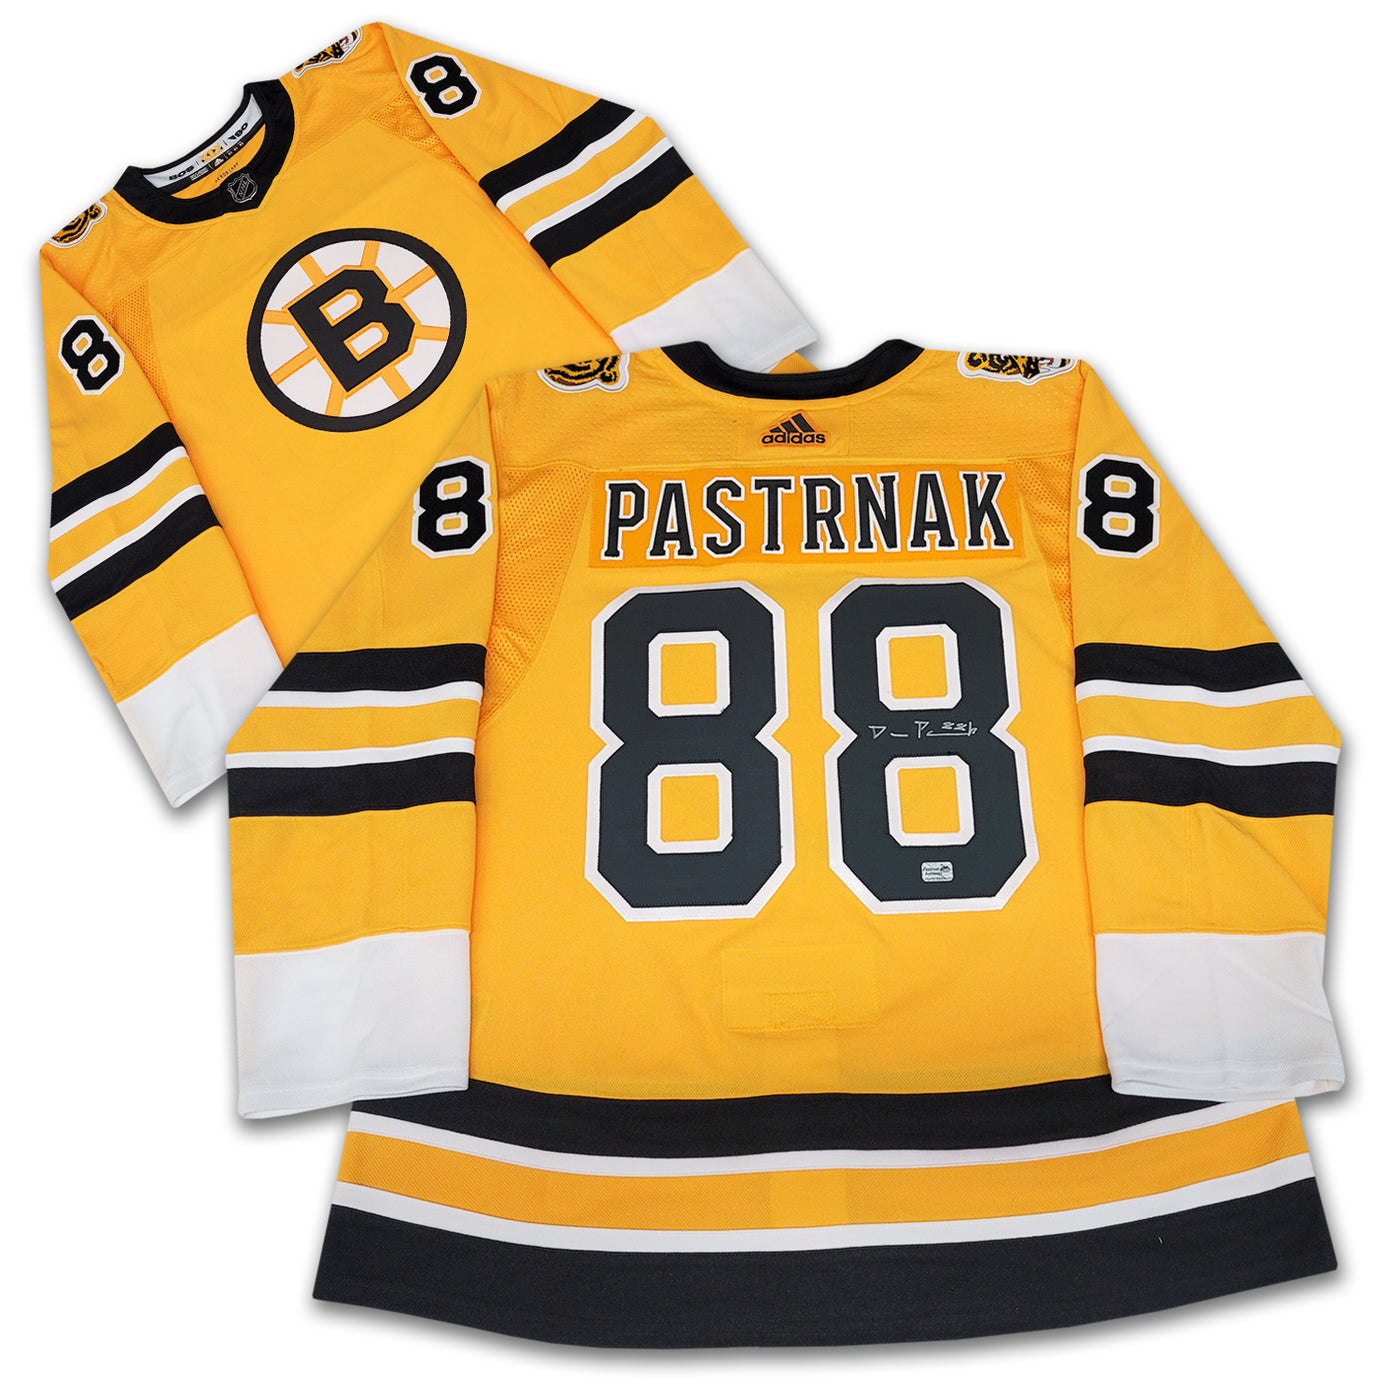 Brand NEW Reverse Retro Boston Bruins David Pastrnak Jersey In Size 52 (L)